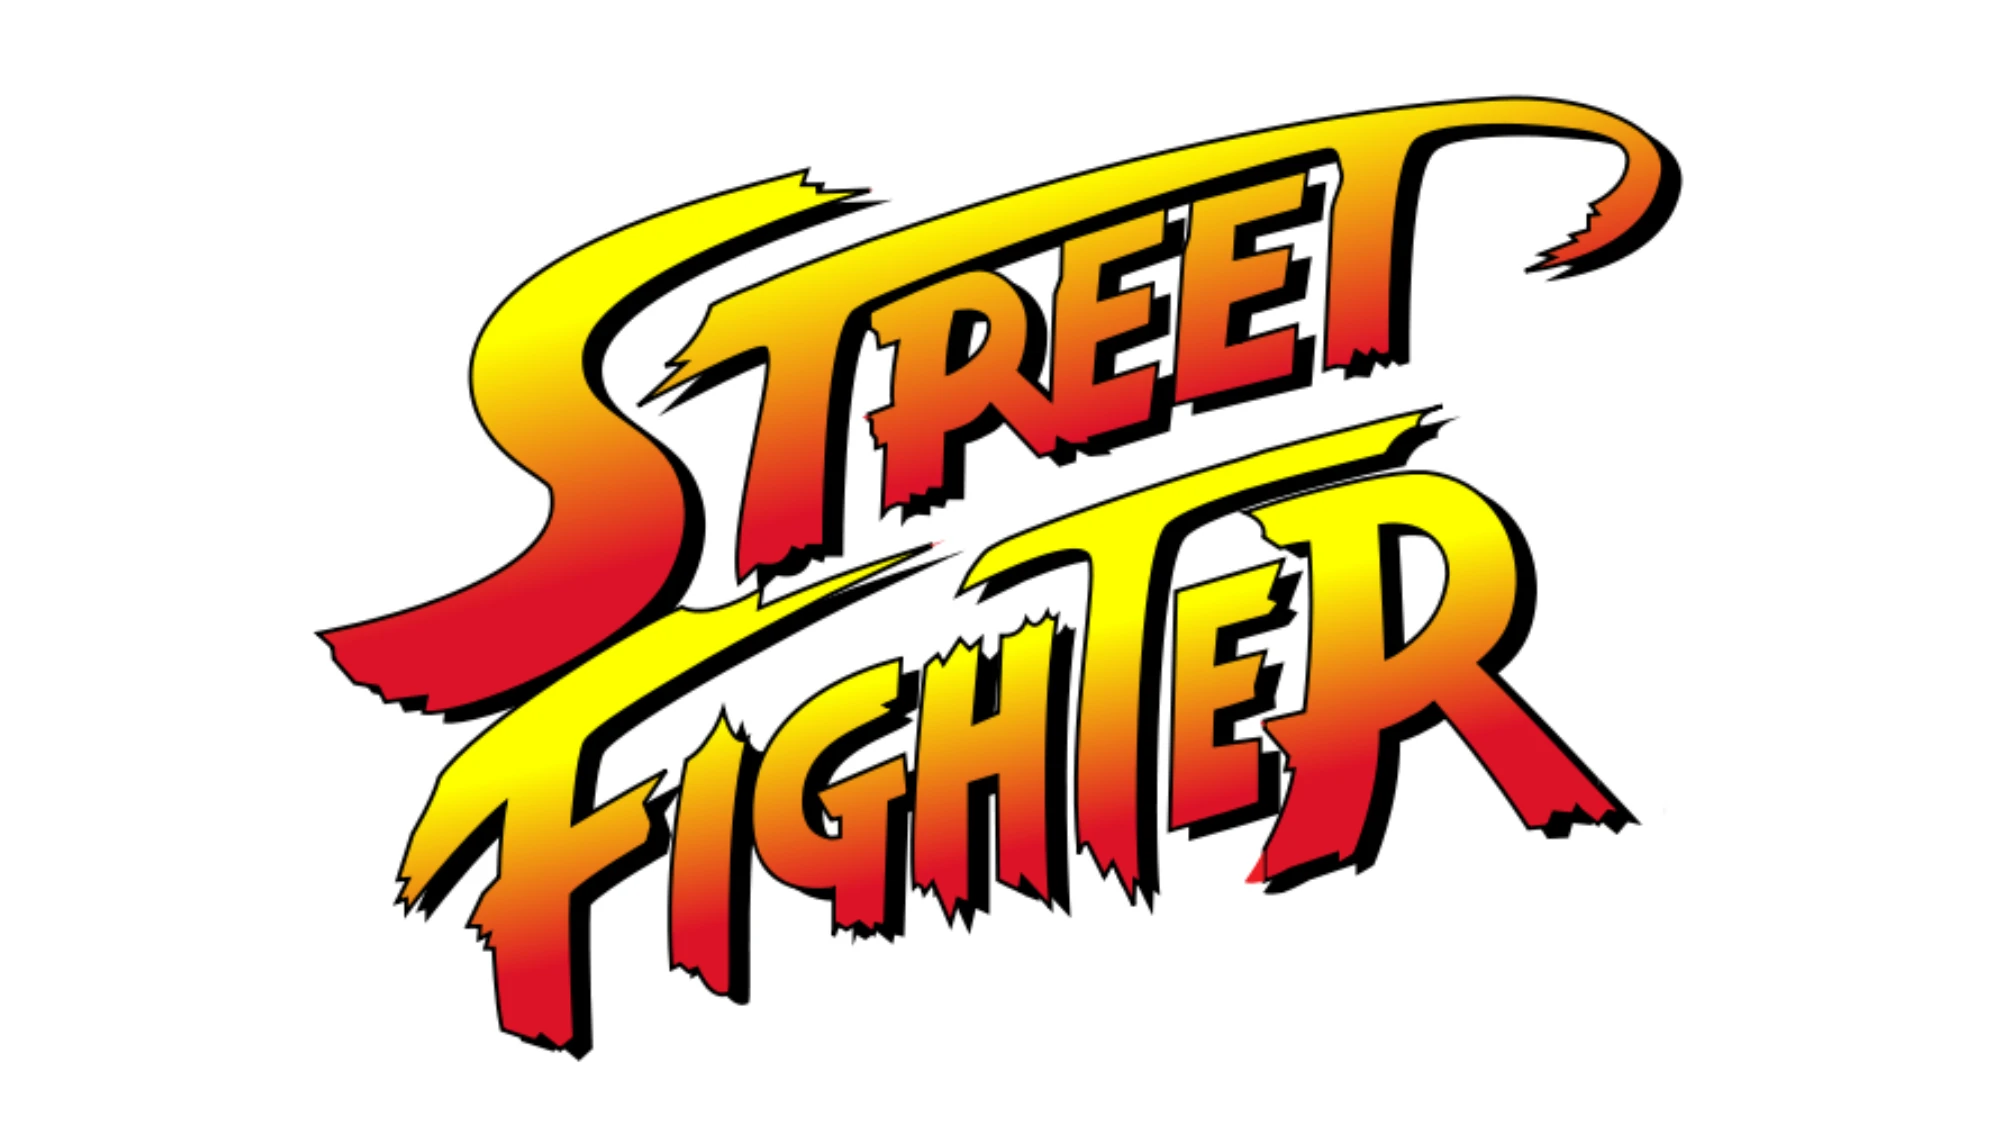 En este momento estás viendo Street Fighter